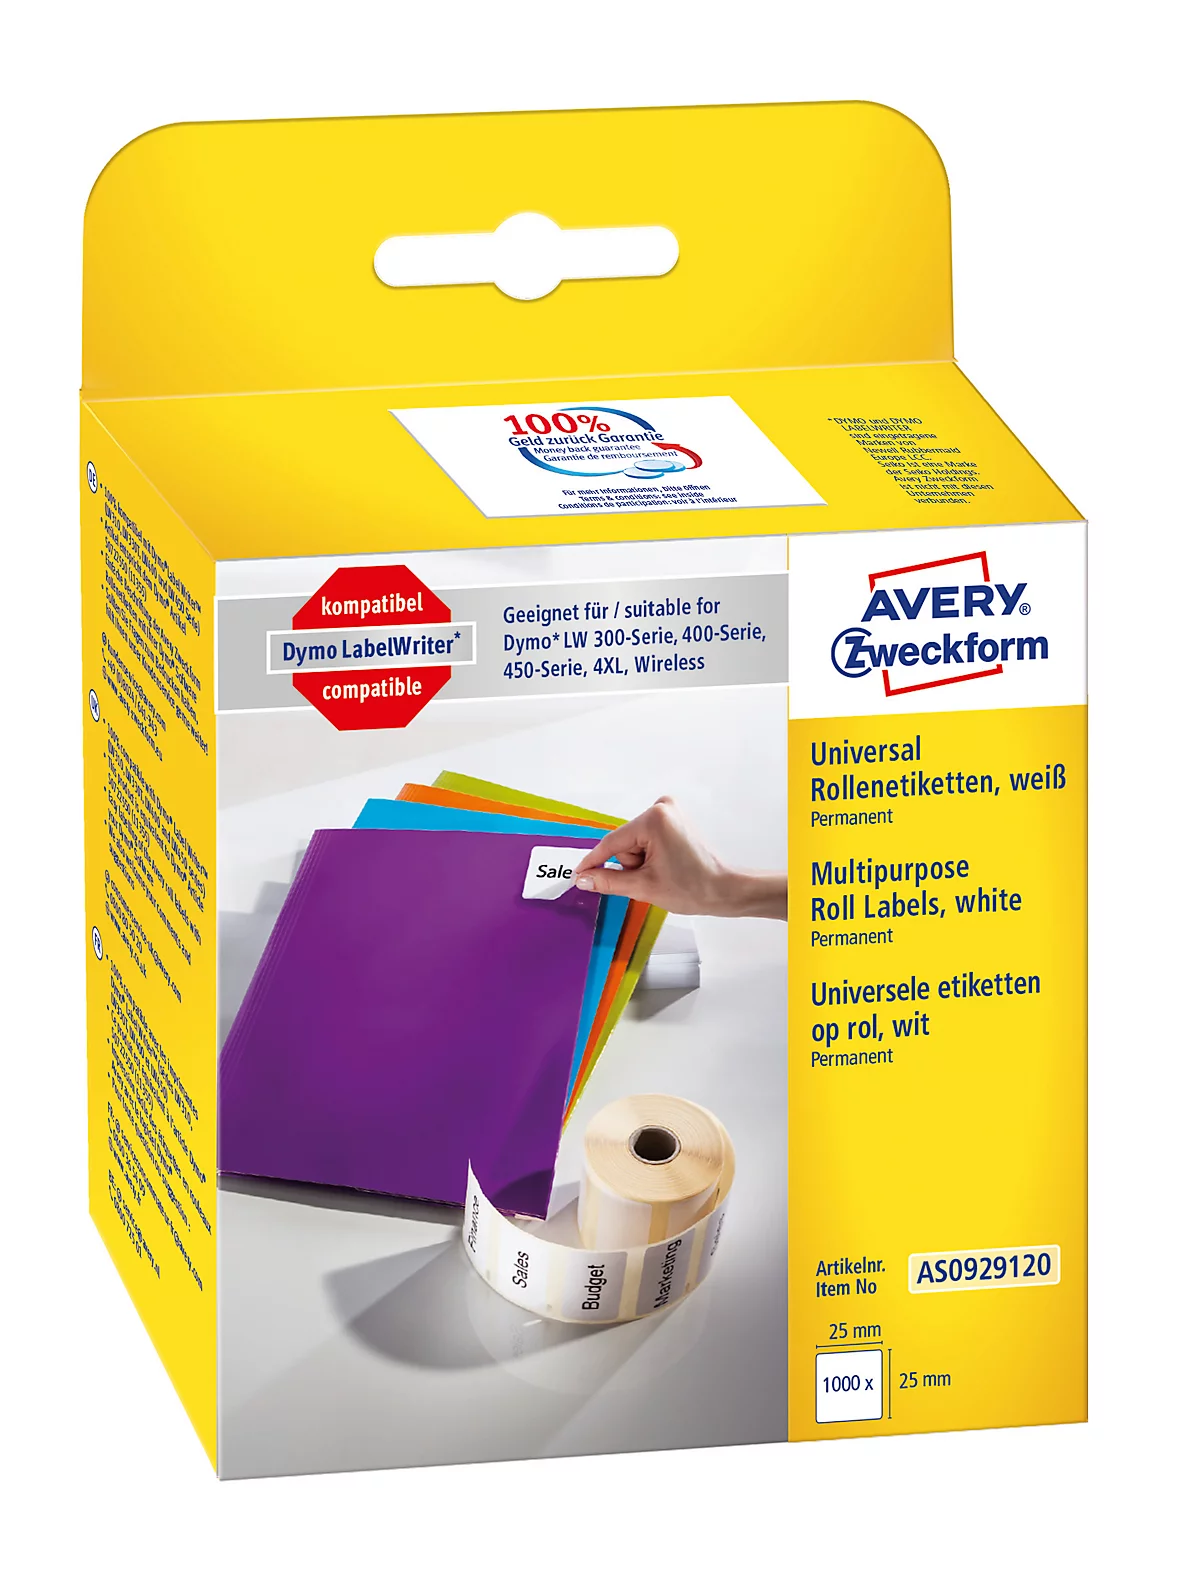 Avery Zweckform Universal Rollenetiketten, Papier, 25 x 25 mm, selbstklebend, weiß, 1000 Etiketten, 1 Rolle